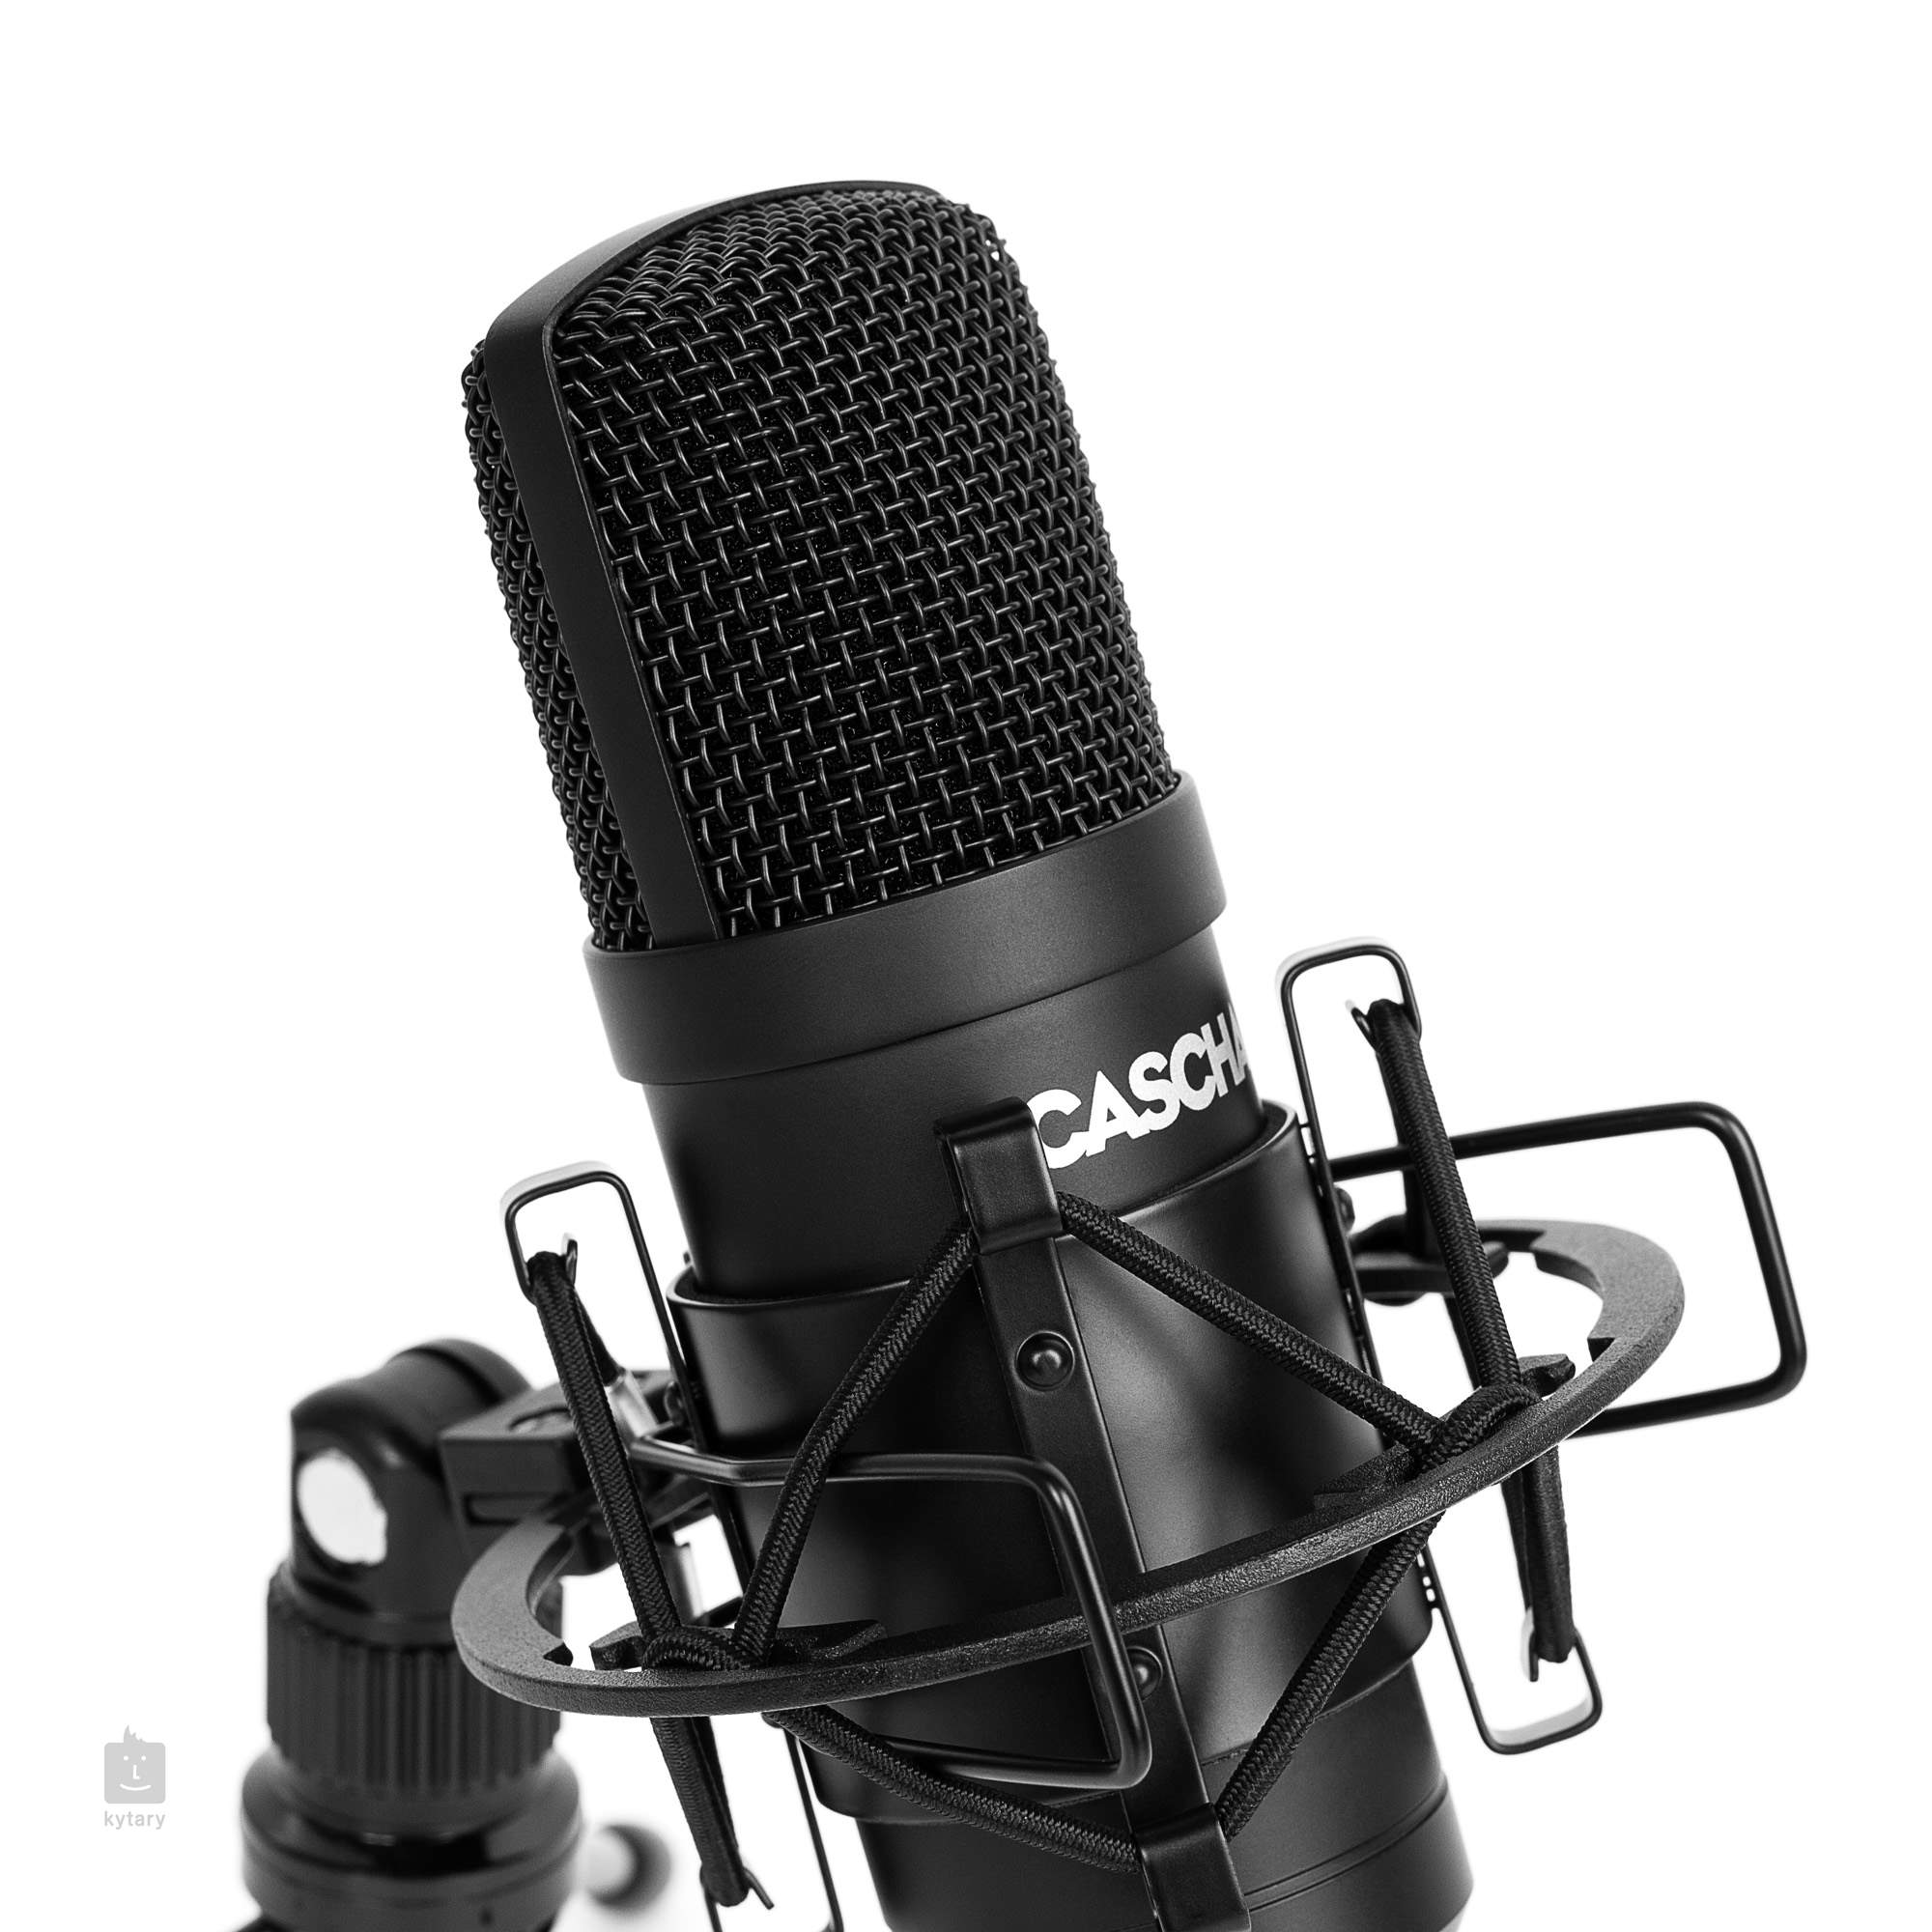 https://img.kytary.com/eshop_fr/velky_v2/na/637502707660970000/99df5bce/64829445/cascha-studio-usb-condenser-microphone-set.jpg